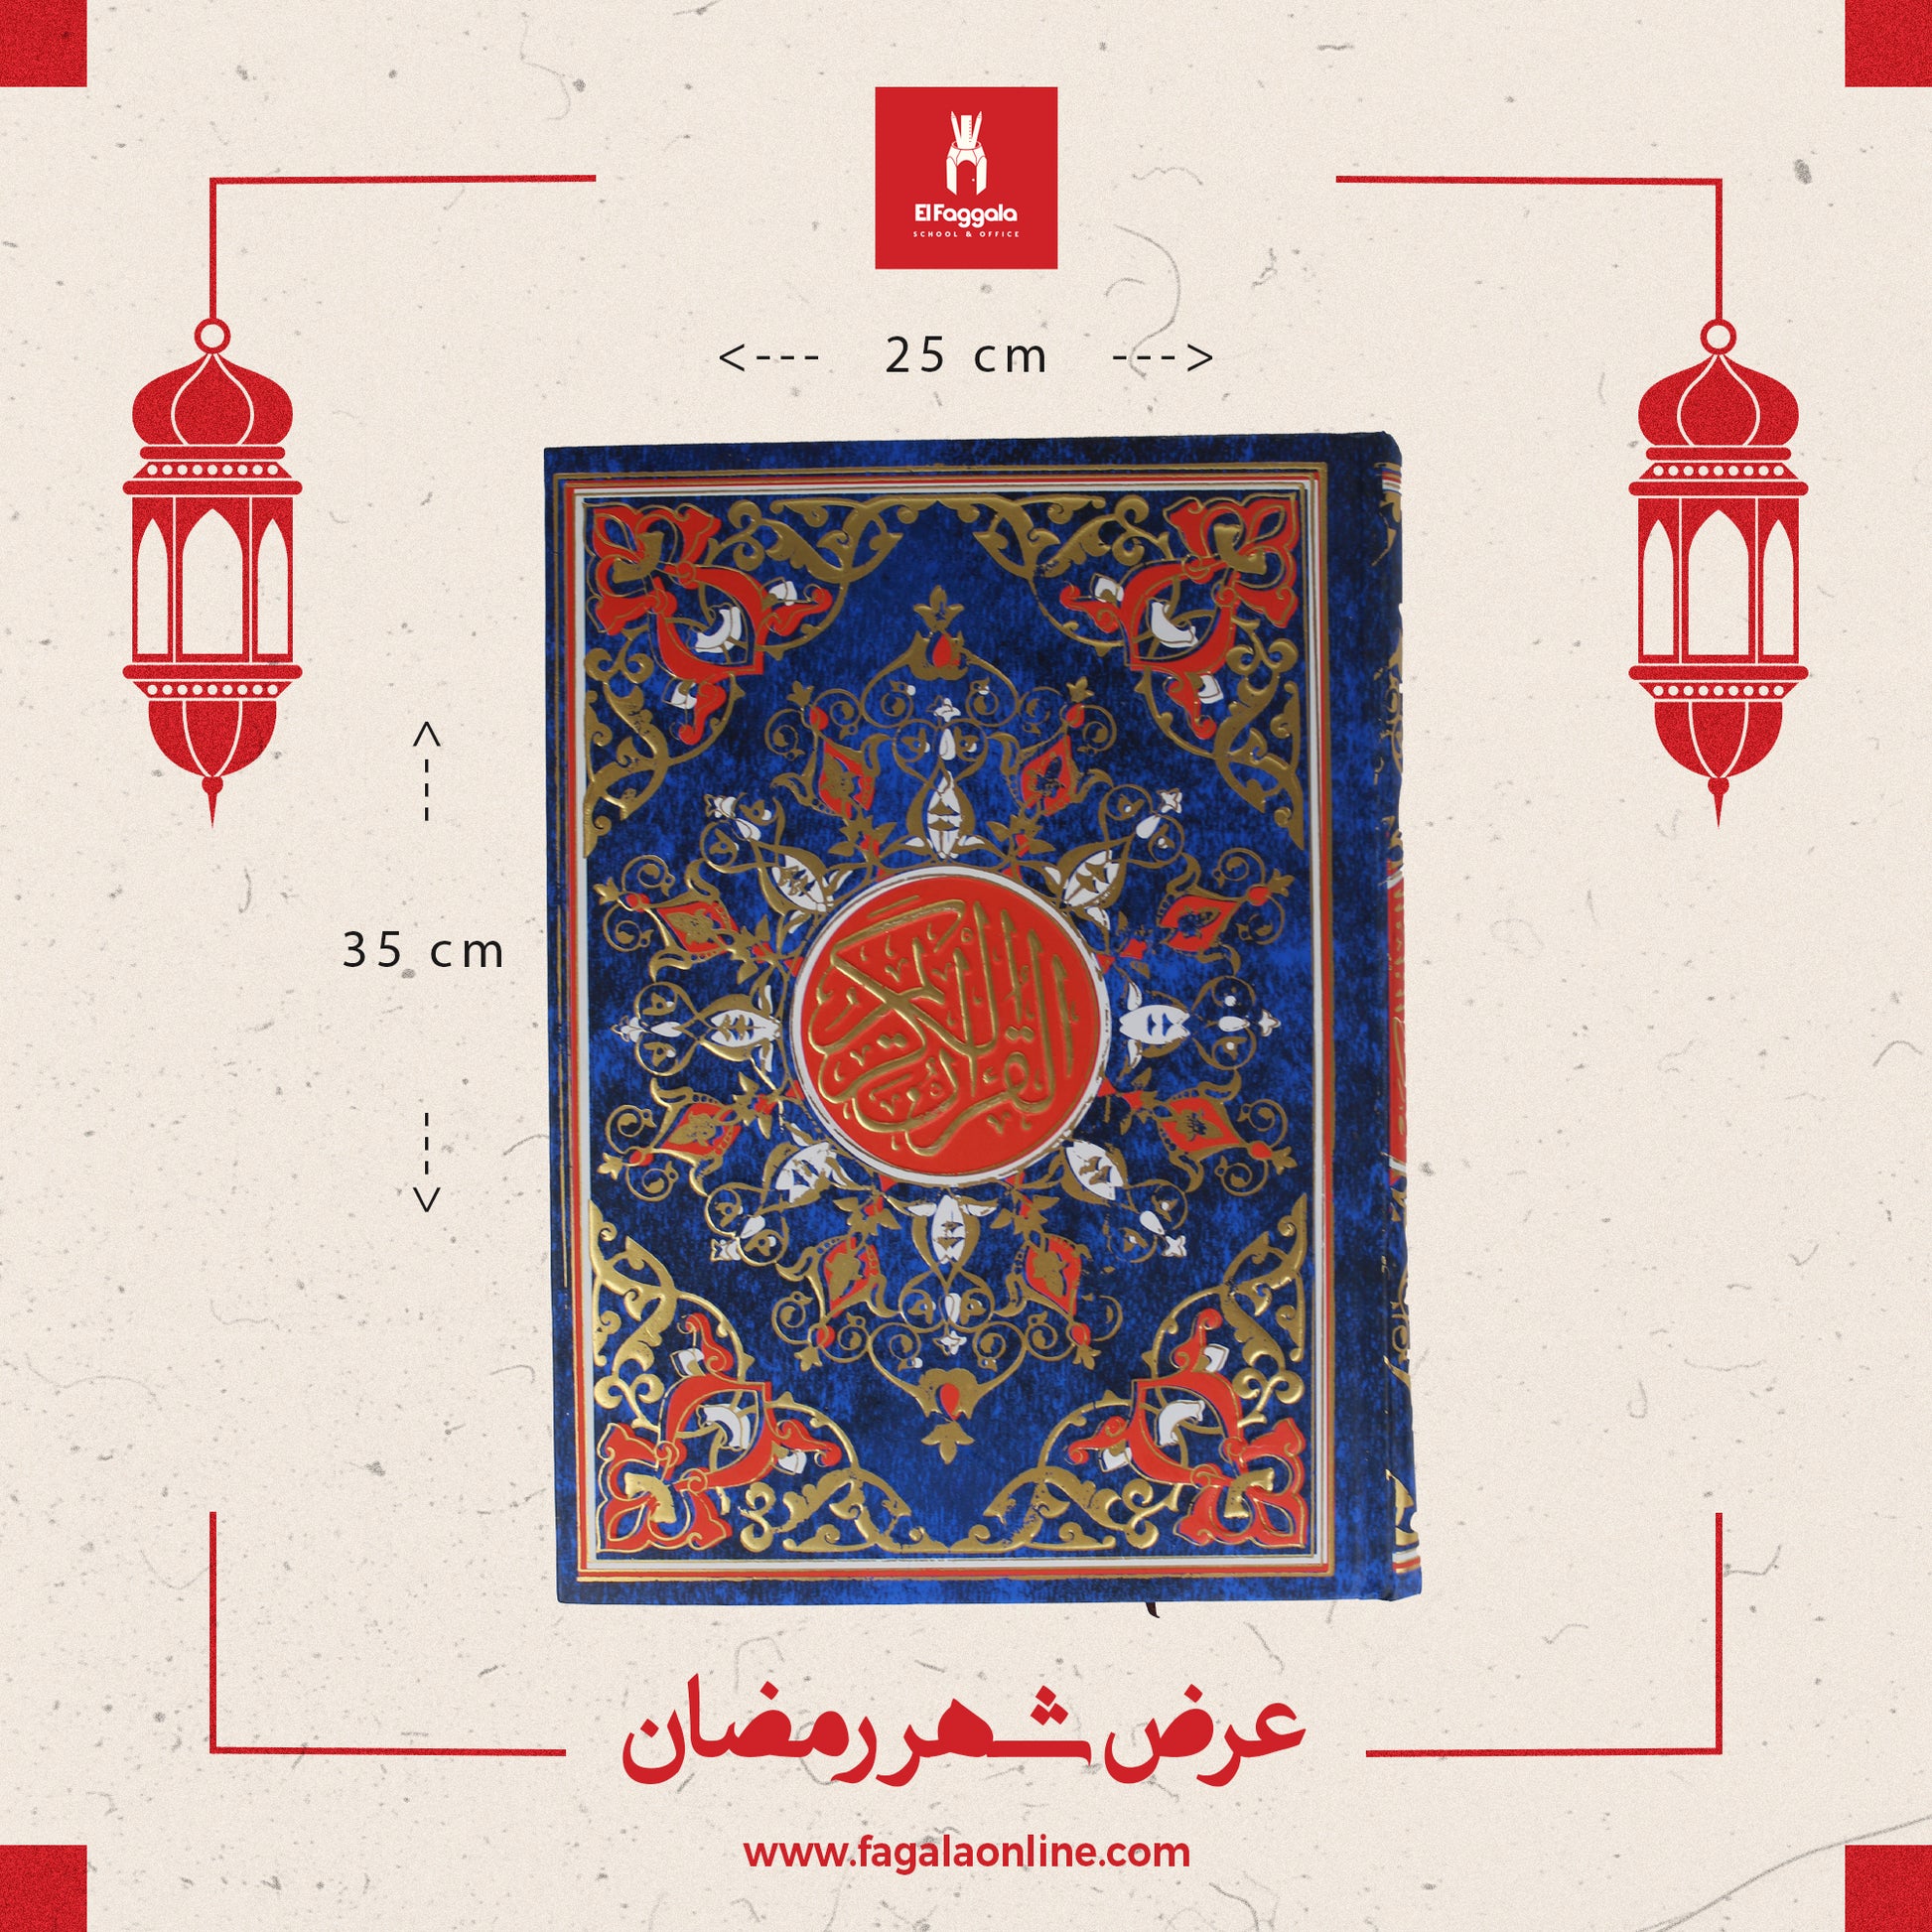 Holy Quran 25cm x 35 cm